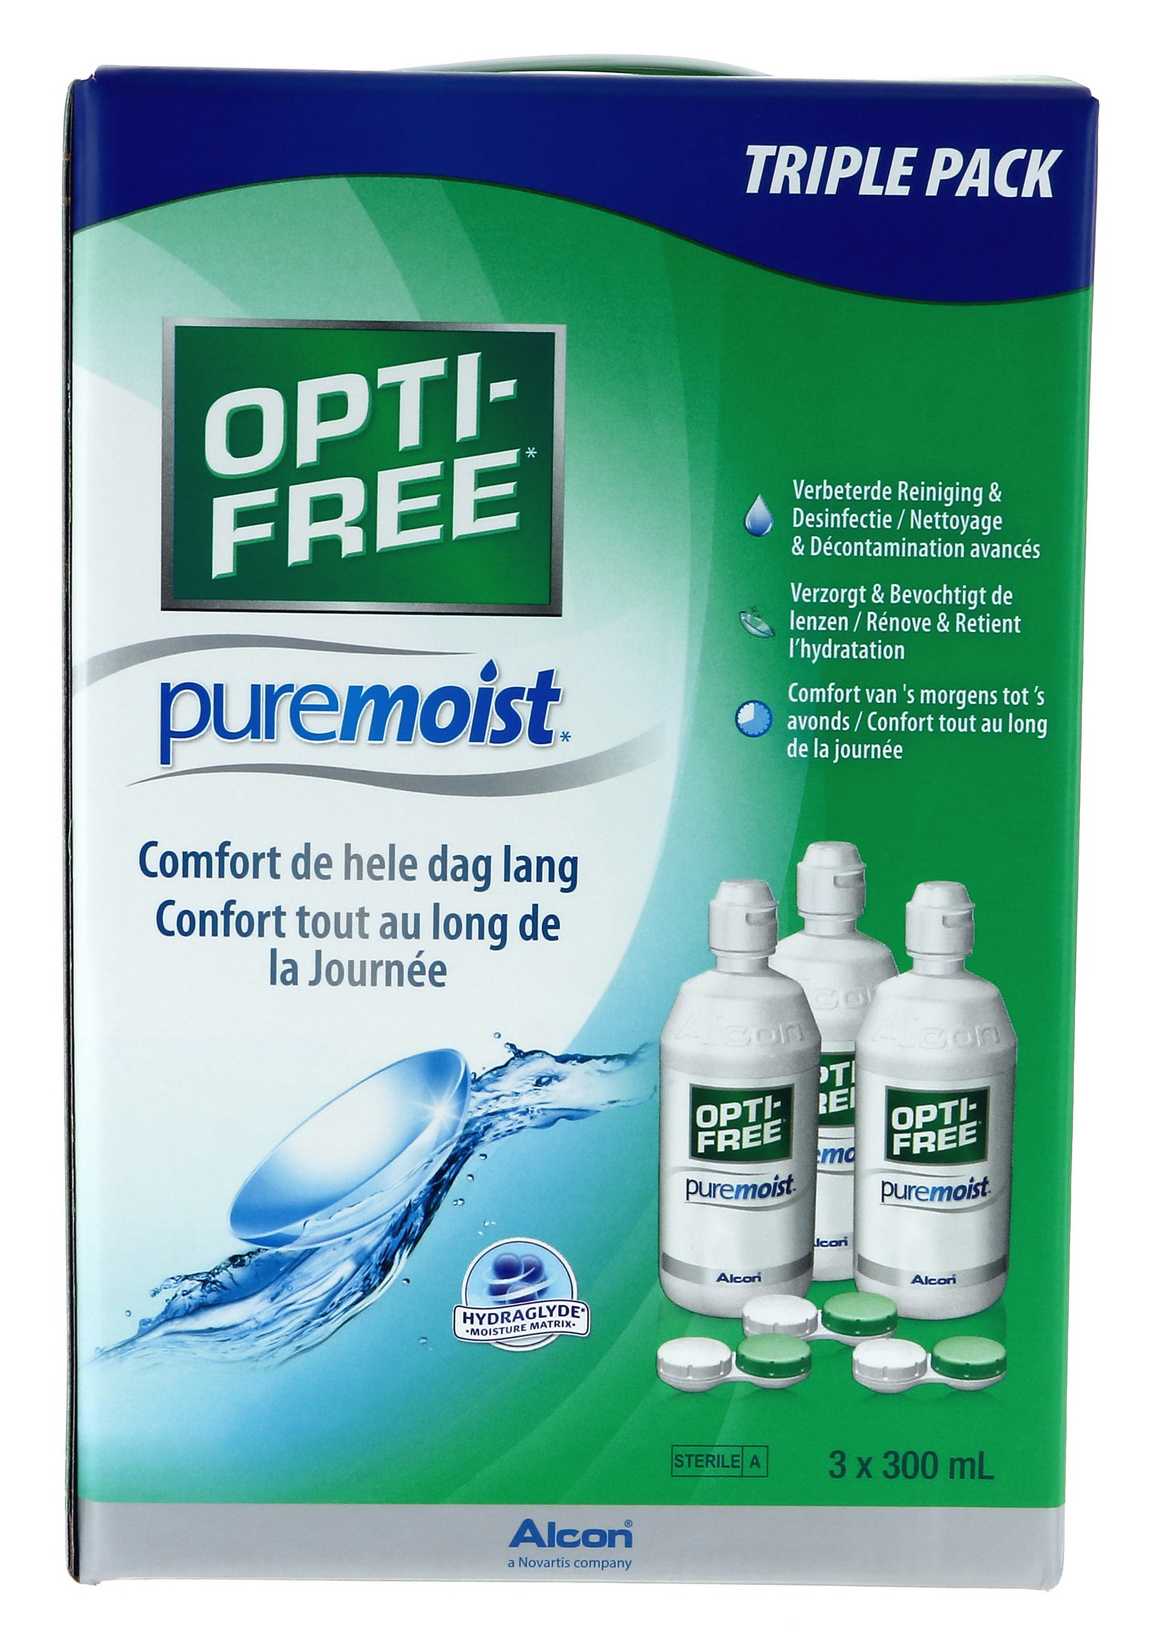  OPTI-FREE PURE MOIST Pack 3 x 300ml ALCON